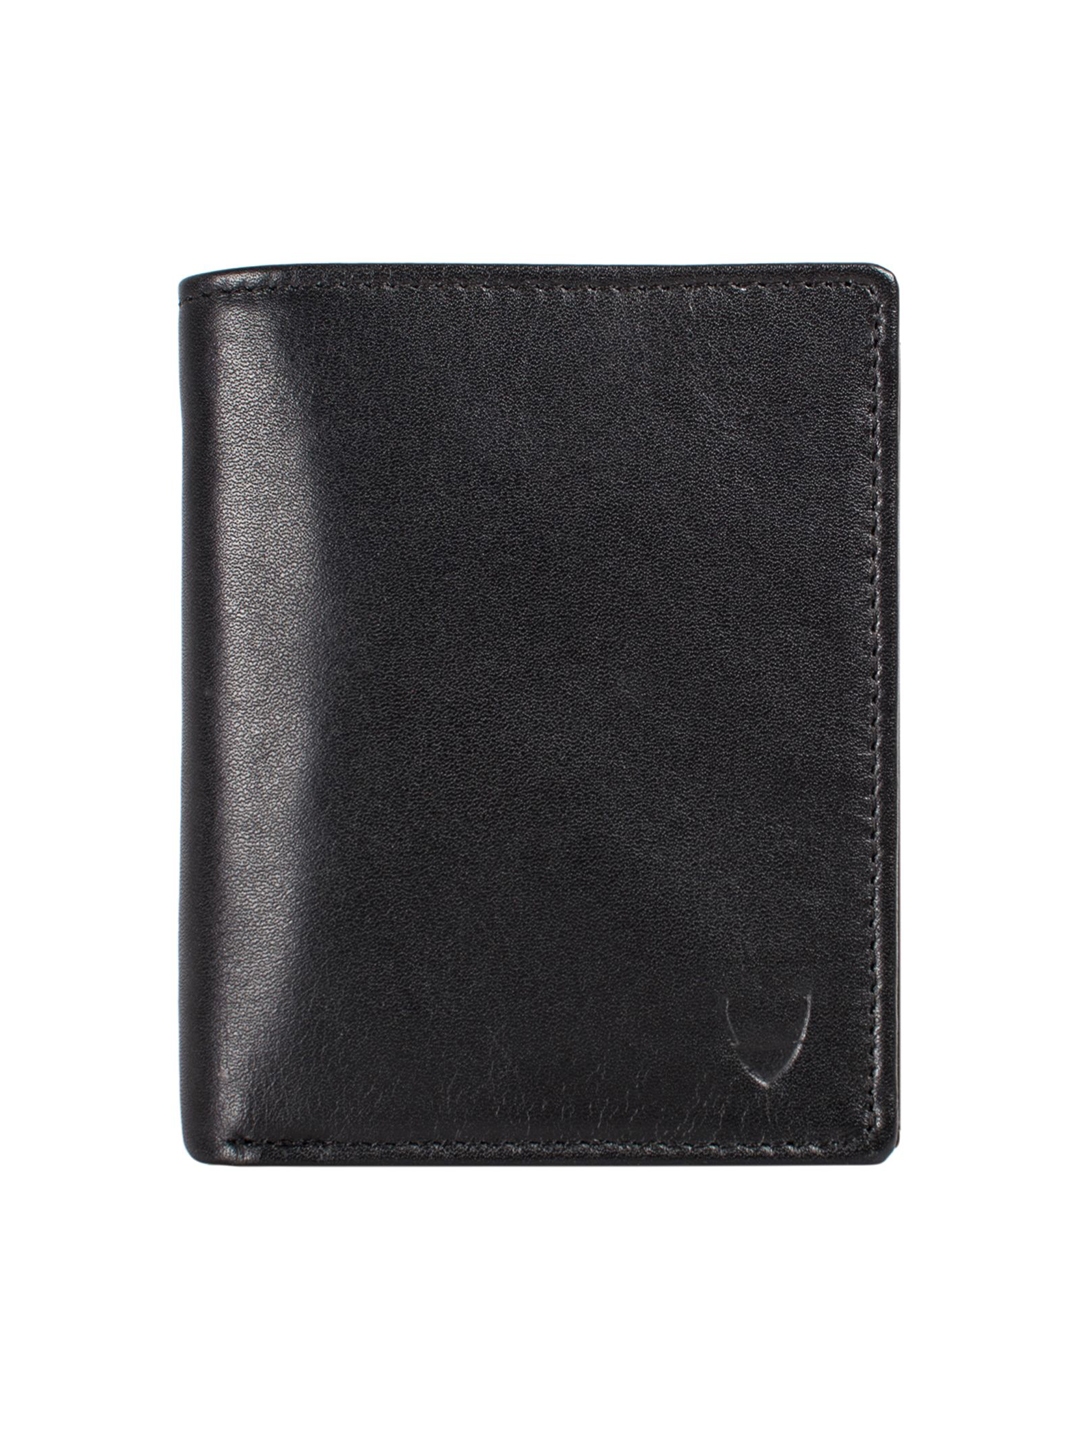 Buy Hidesign Men Black Leather Three Fold Wallet - Wallets for Men ...